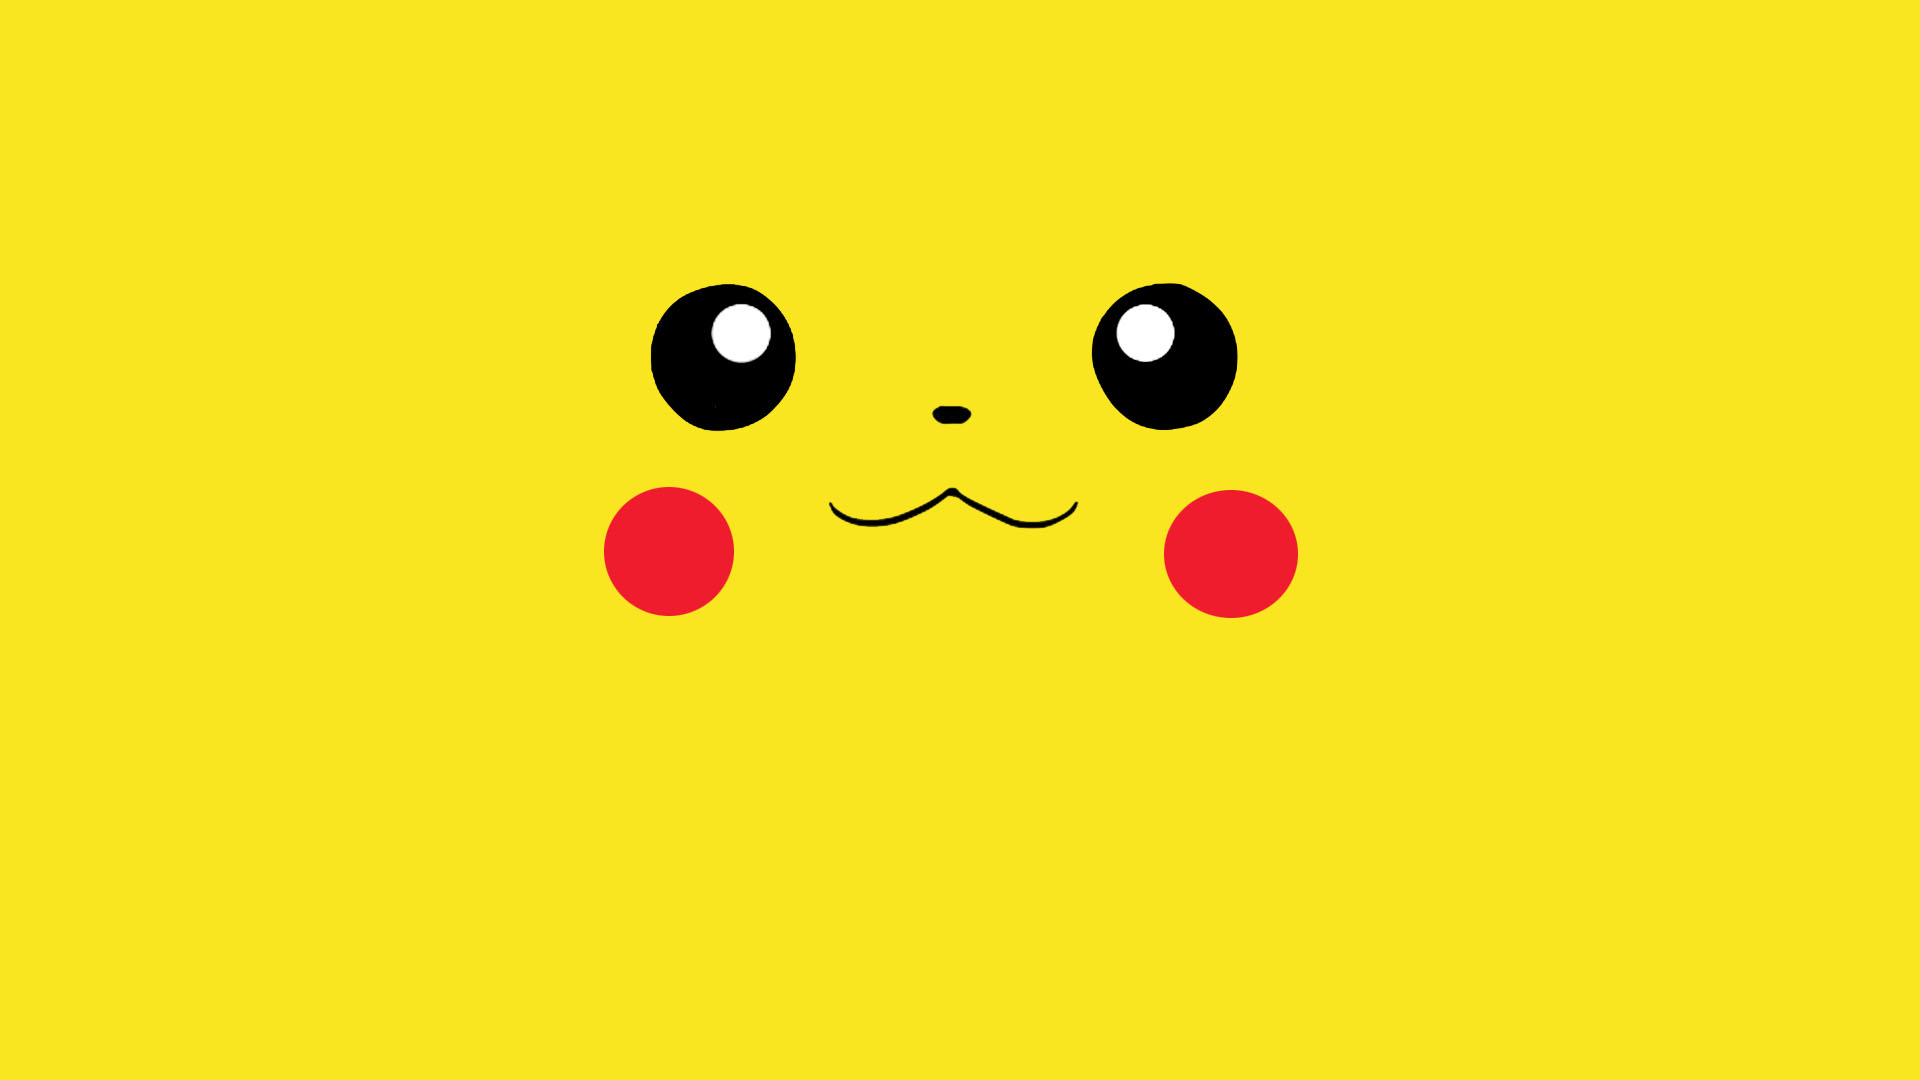 Cute And Fun Pikachu Cute Background For Phone Or Desktop